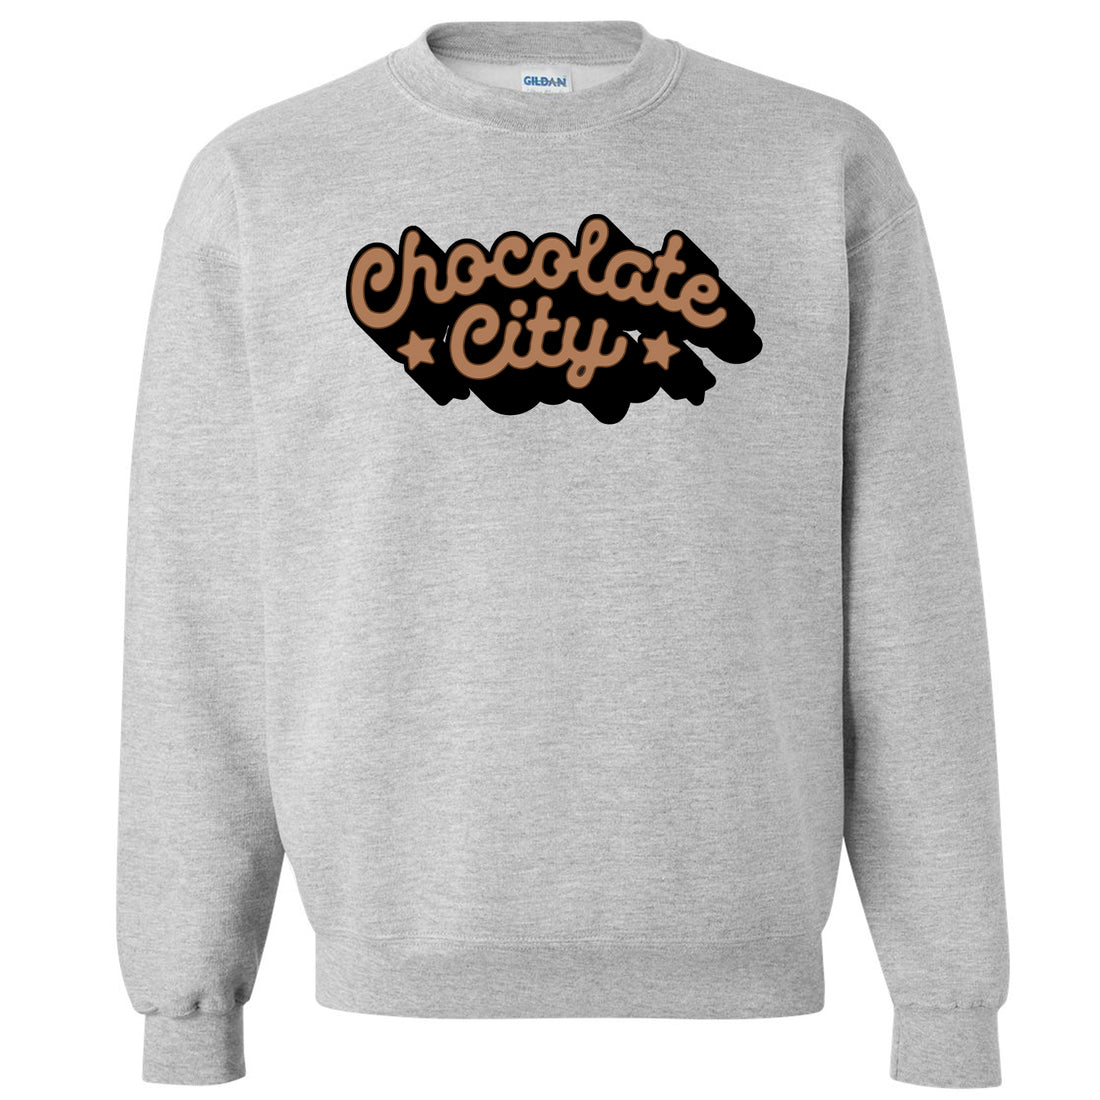 Chocolate City Crewneck Sweatshirt